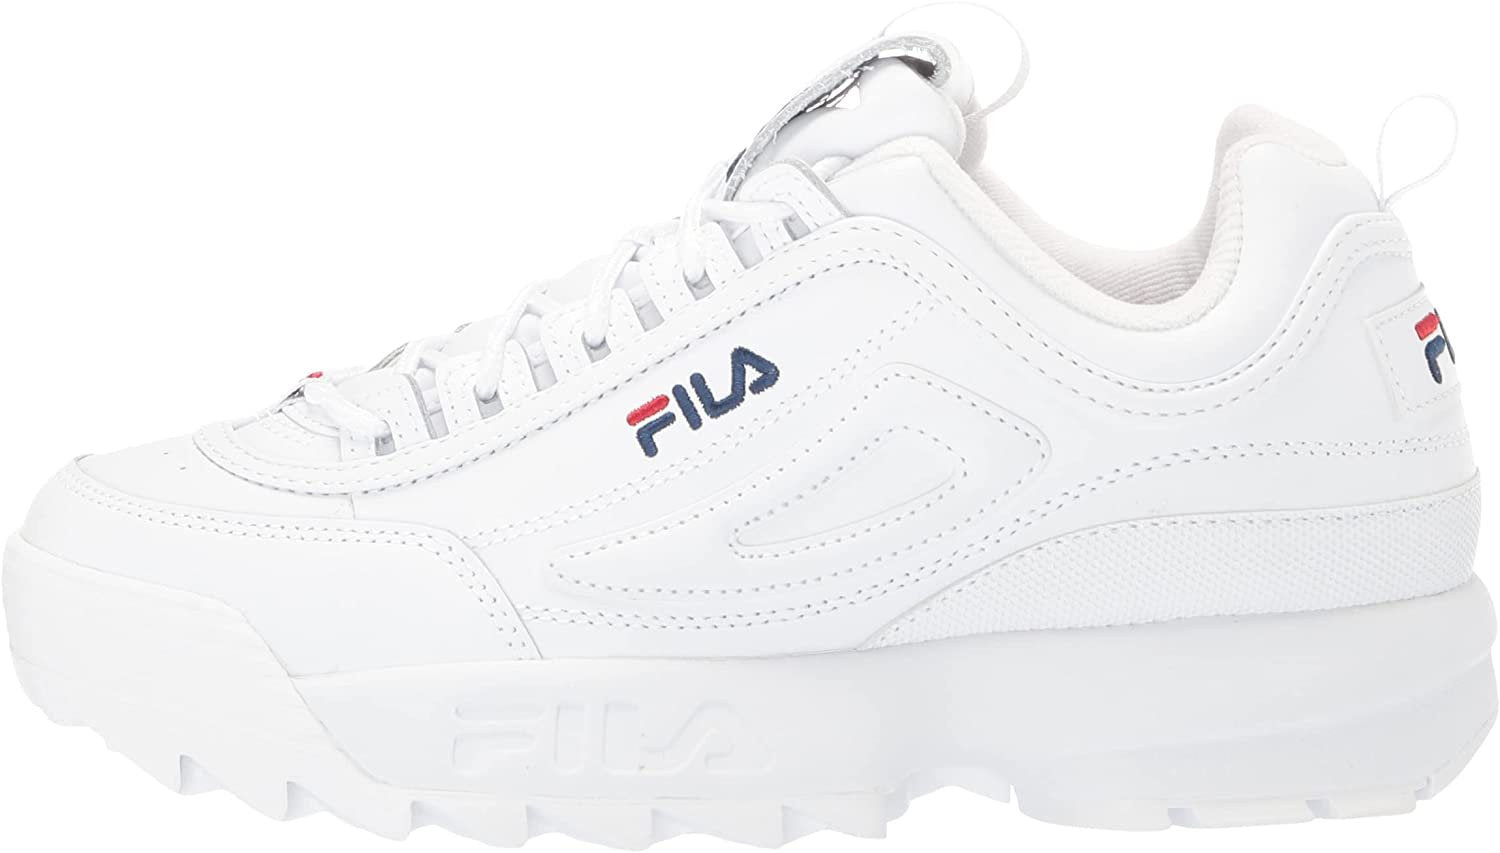 Fila womens Fila Women's Disruptor Ii Premium Sneaker, White/Navy/Red, 8 US